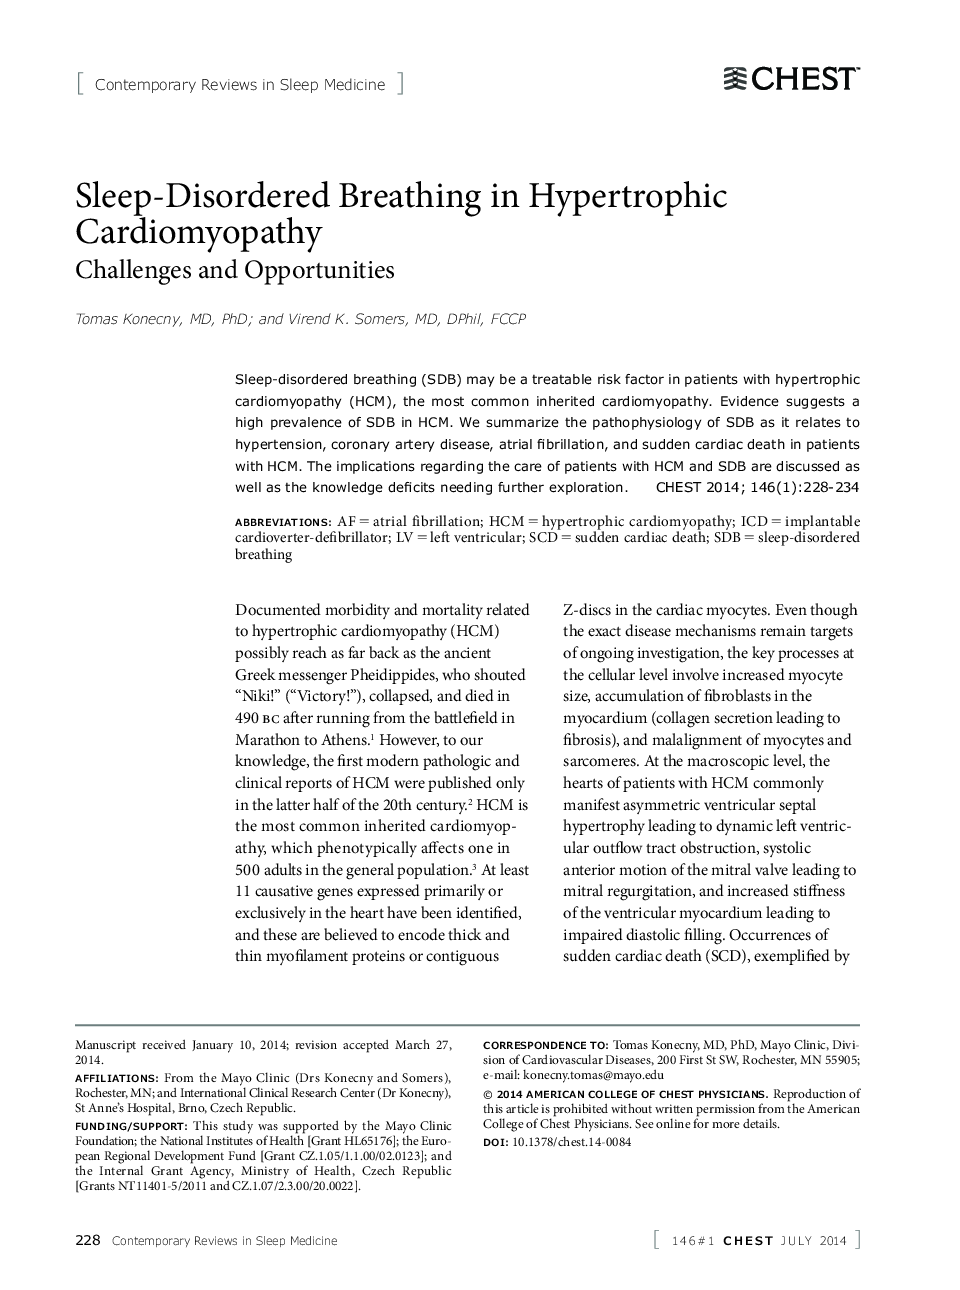 Sleep-Disordered Breathing in Hypertrophic Cardiomyopathy